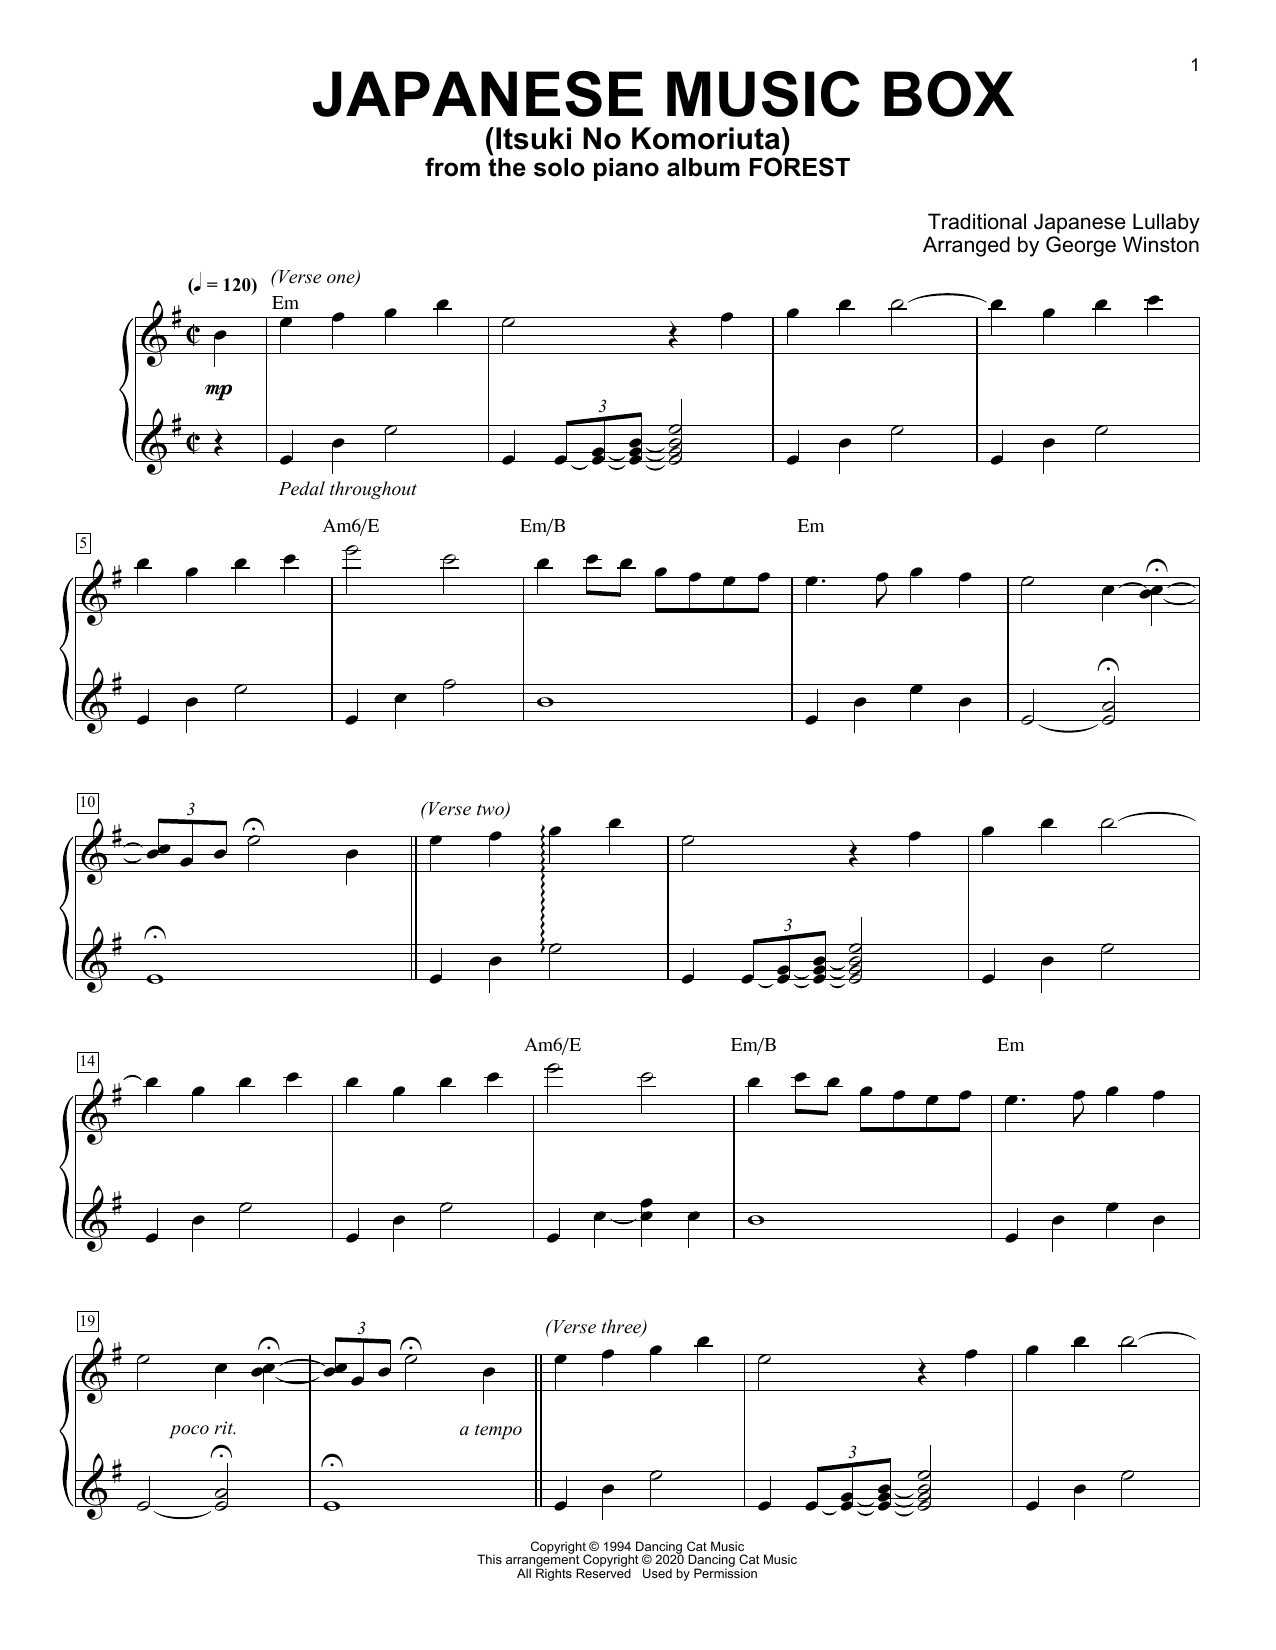 George Winston Japanese Music Box (Itsuki No Komoriuta) Sheet Music Notes & Chords for Easy Piano - Download or Print PDF